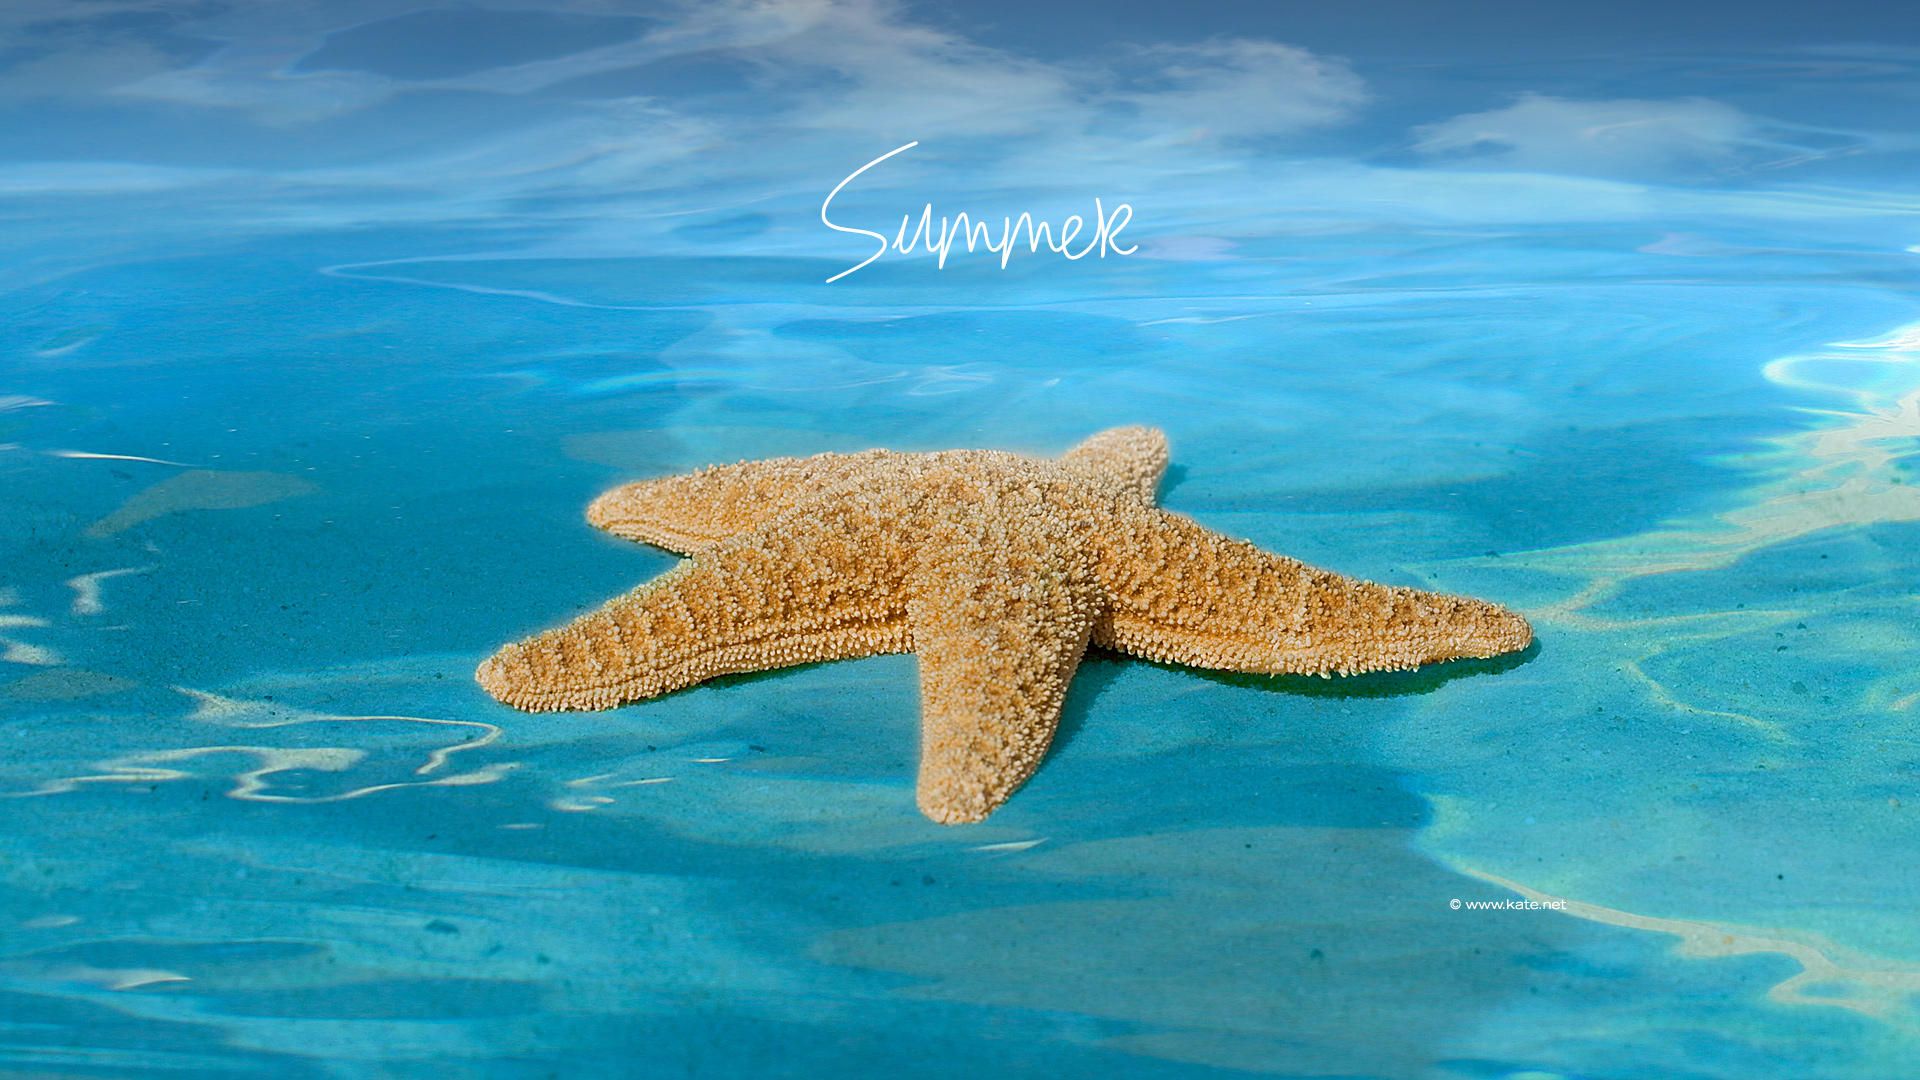 Holidays Seasons Screensavers Image Summer